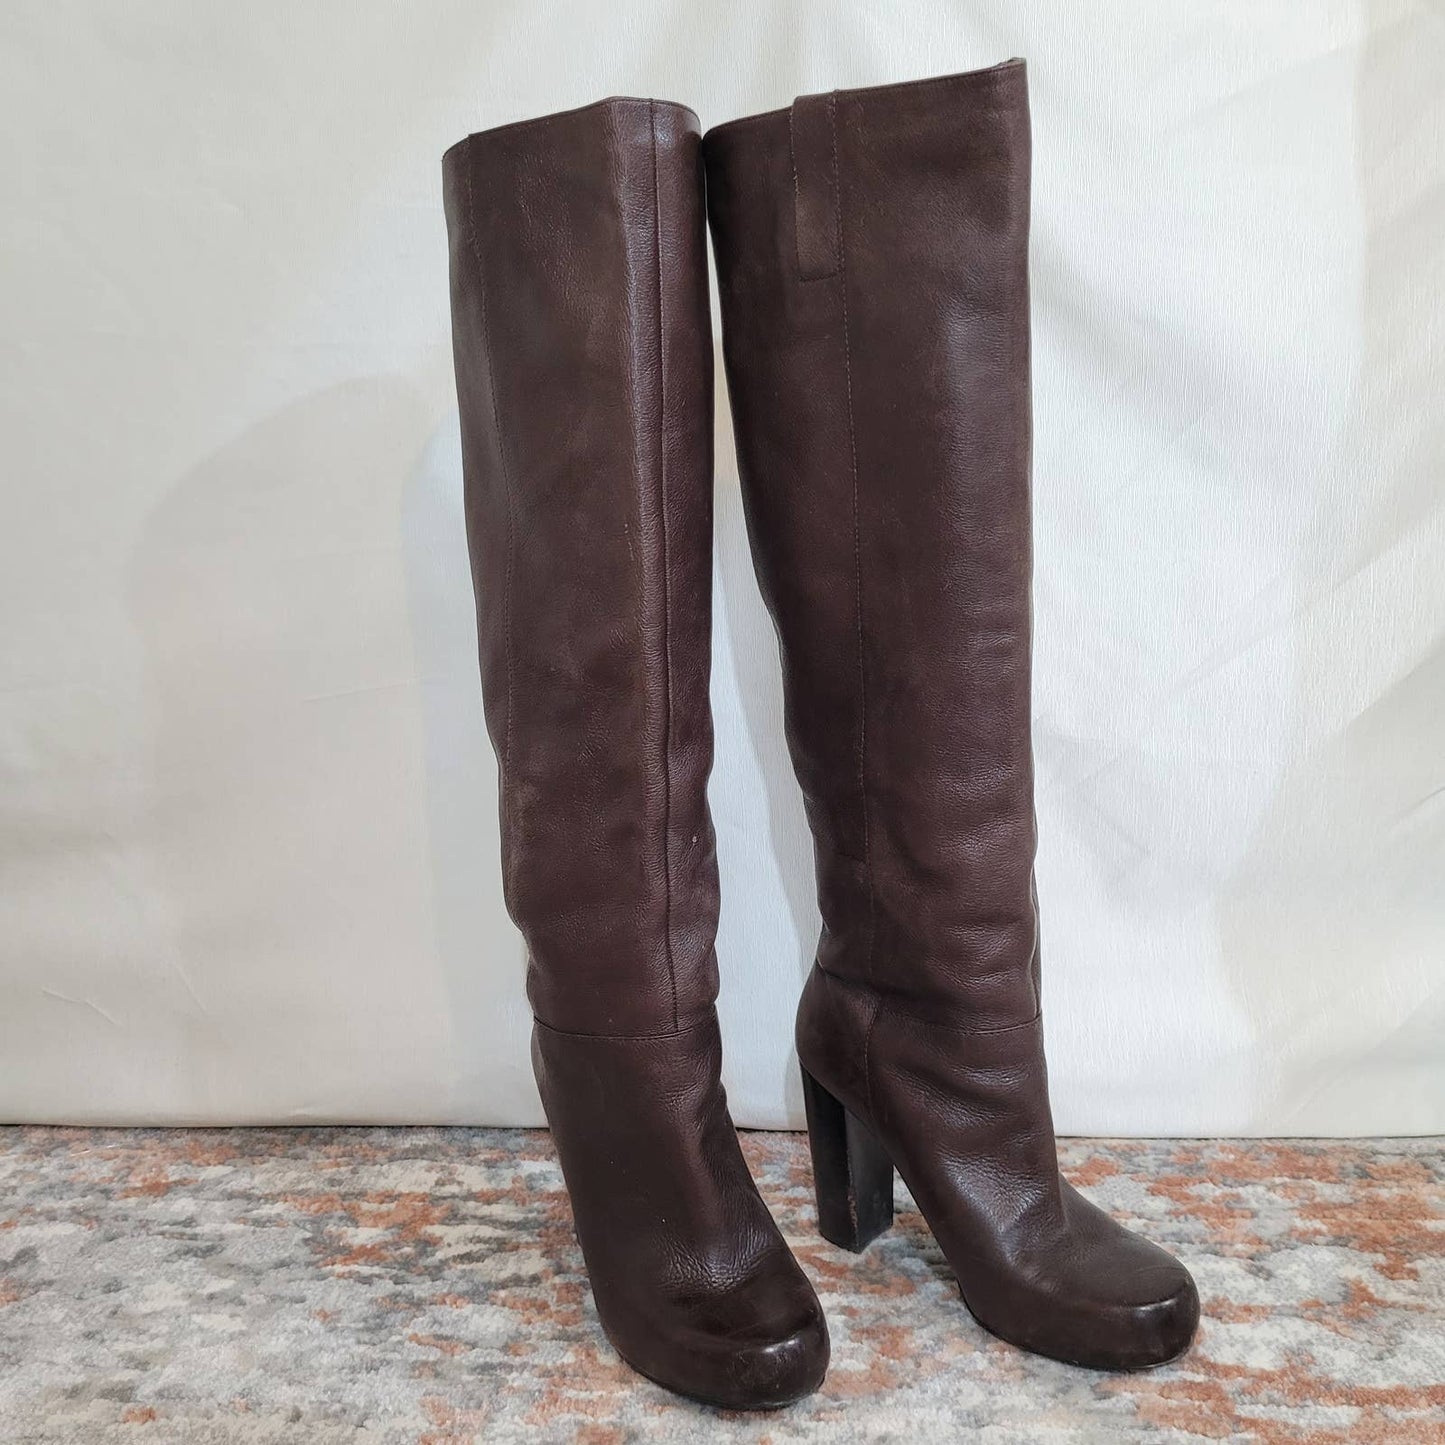 Nine West Crop Shop Brown High Heel Boots - Size 7